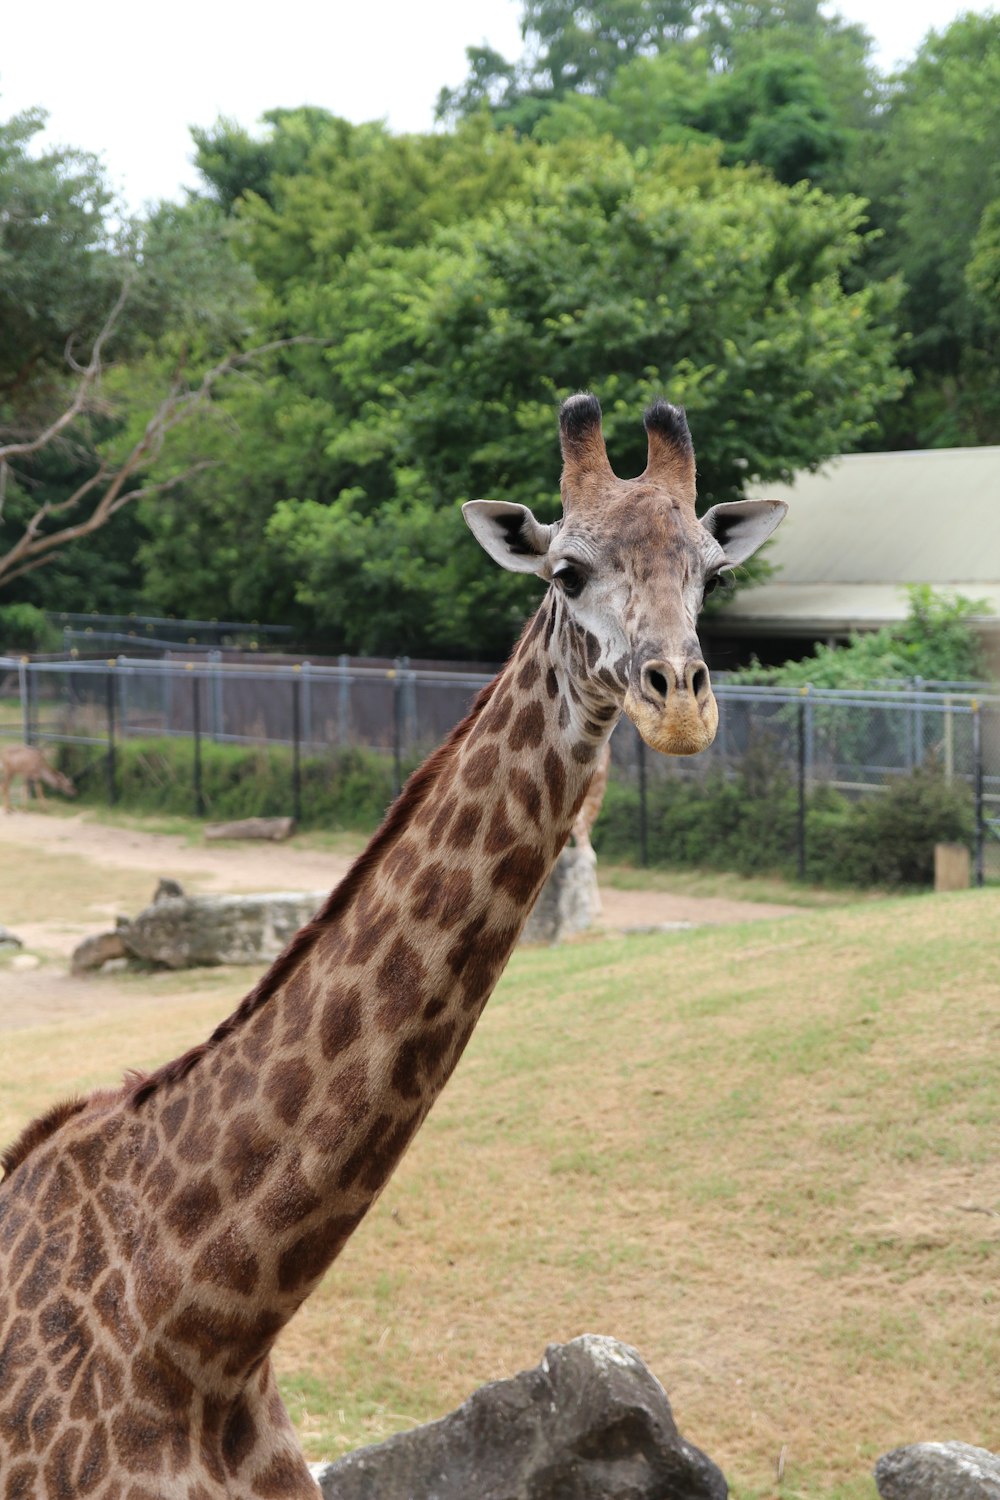 giraffe eating grass during daytime